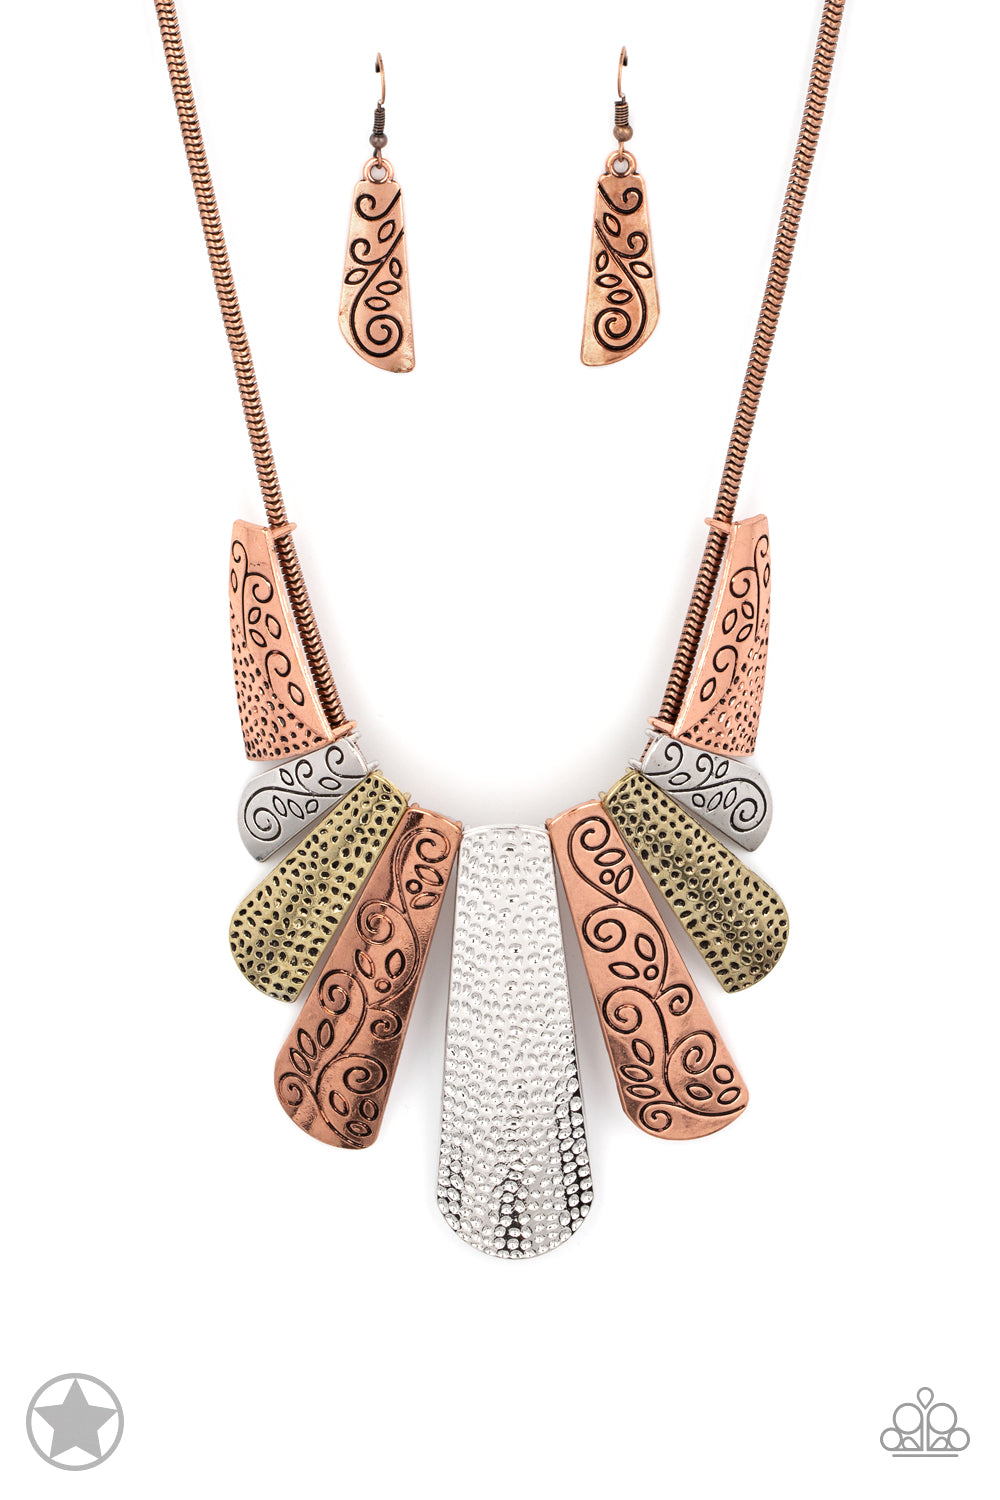 . Untamed - Copper Necklace